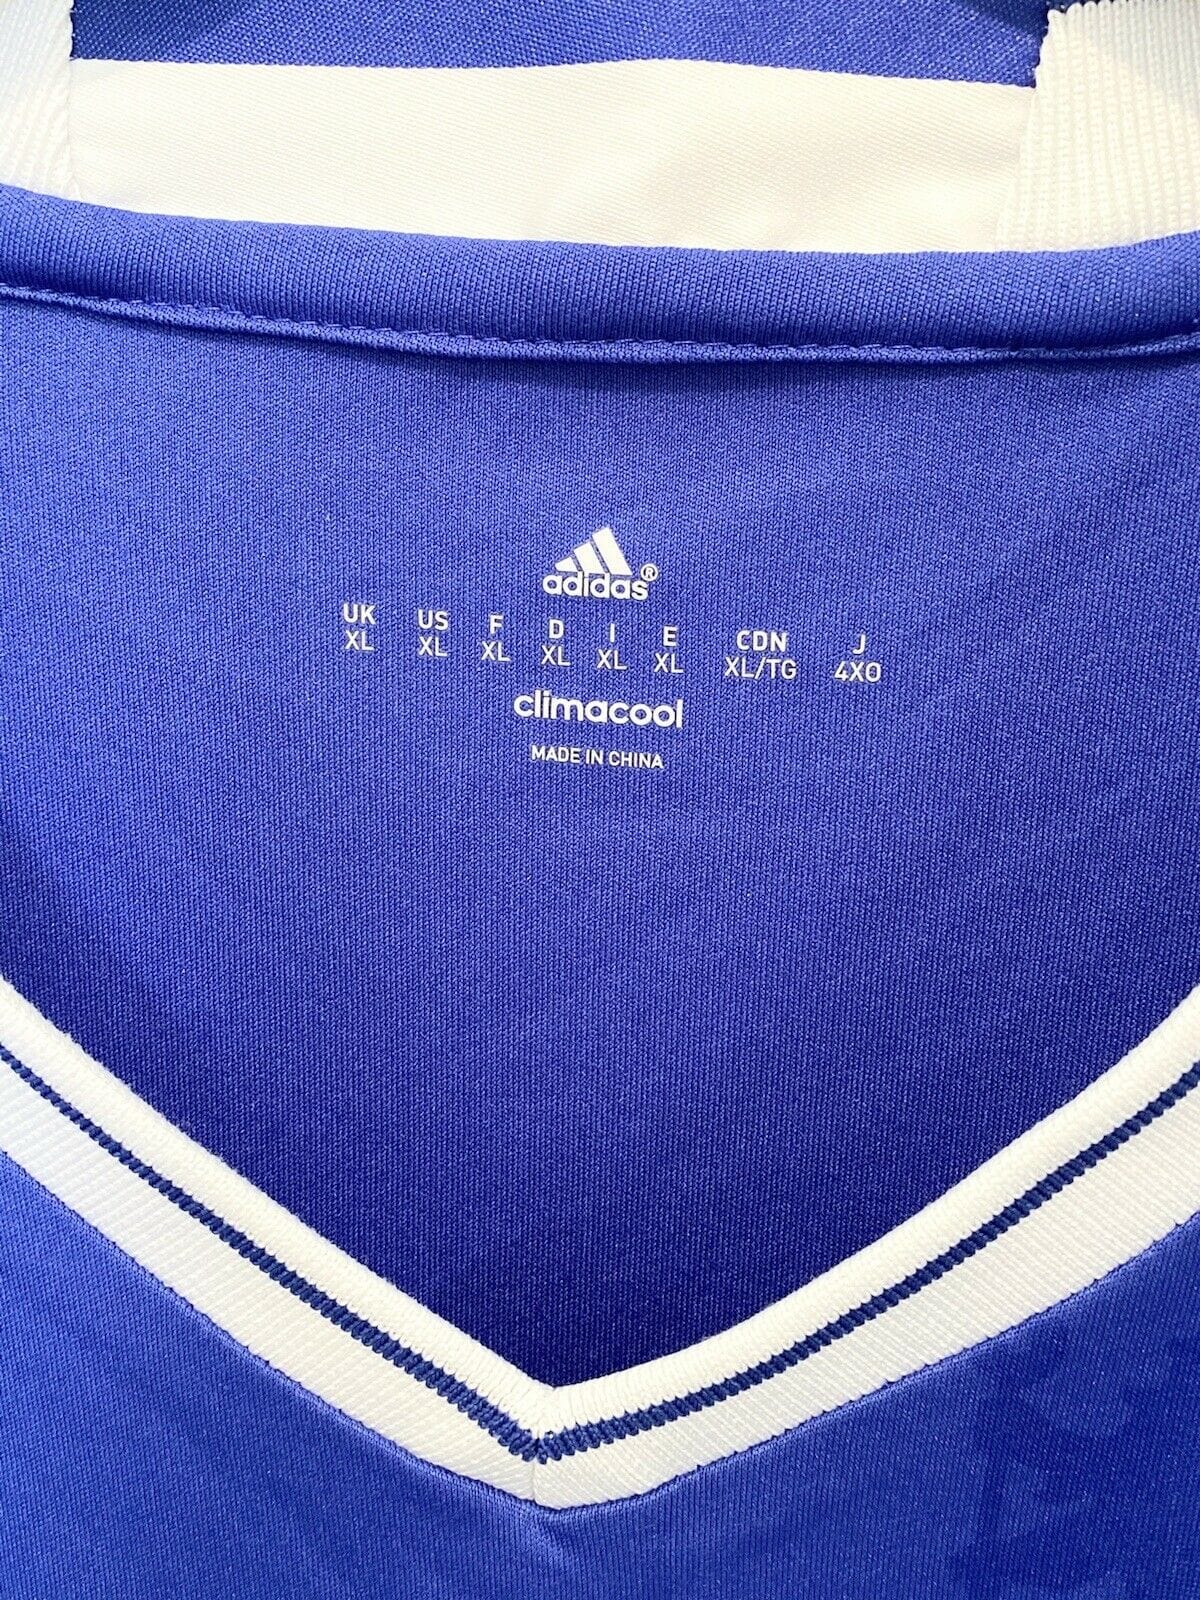 2016/17 CHELSEA Vintage adidas Home Football Shirt Jersey (XL) Costa, Hazard Era